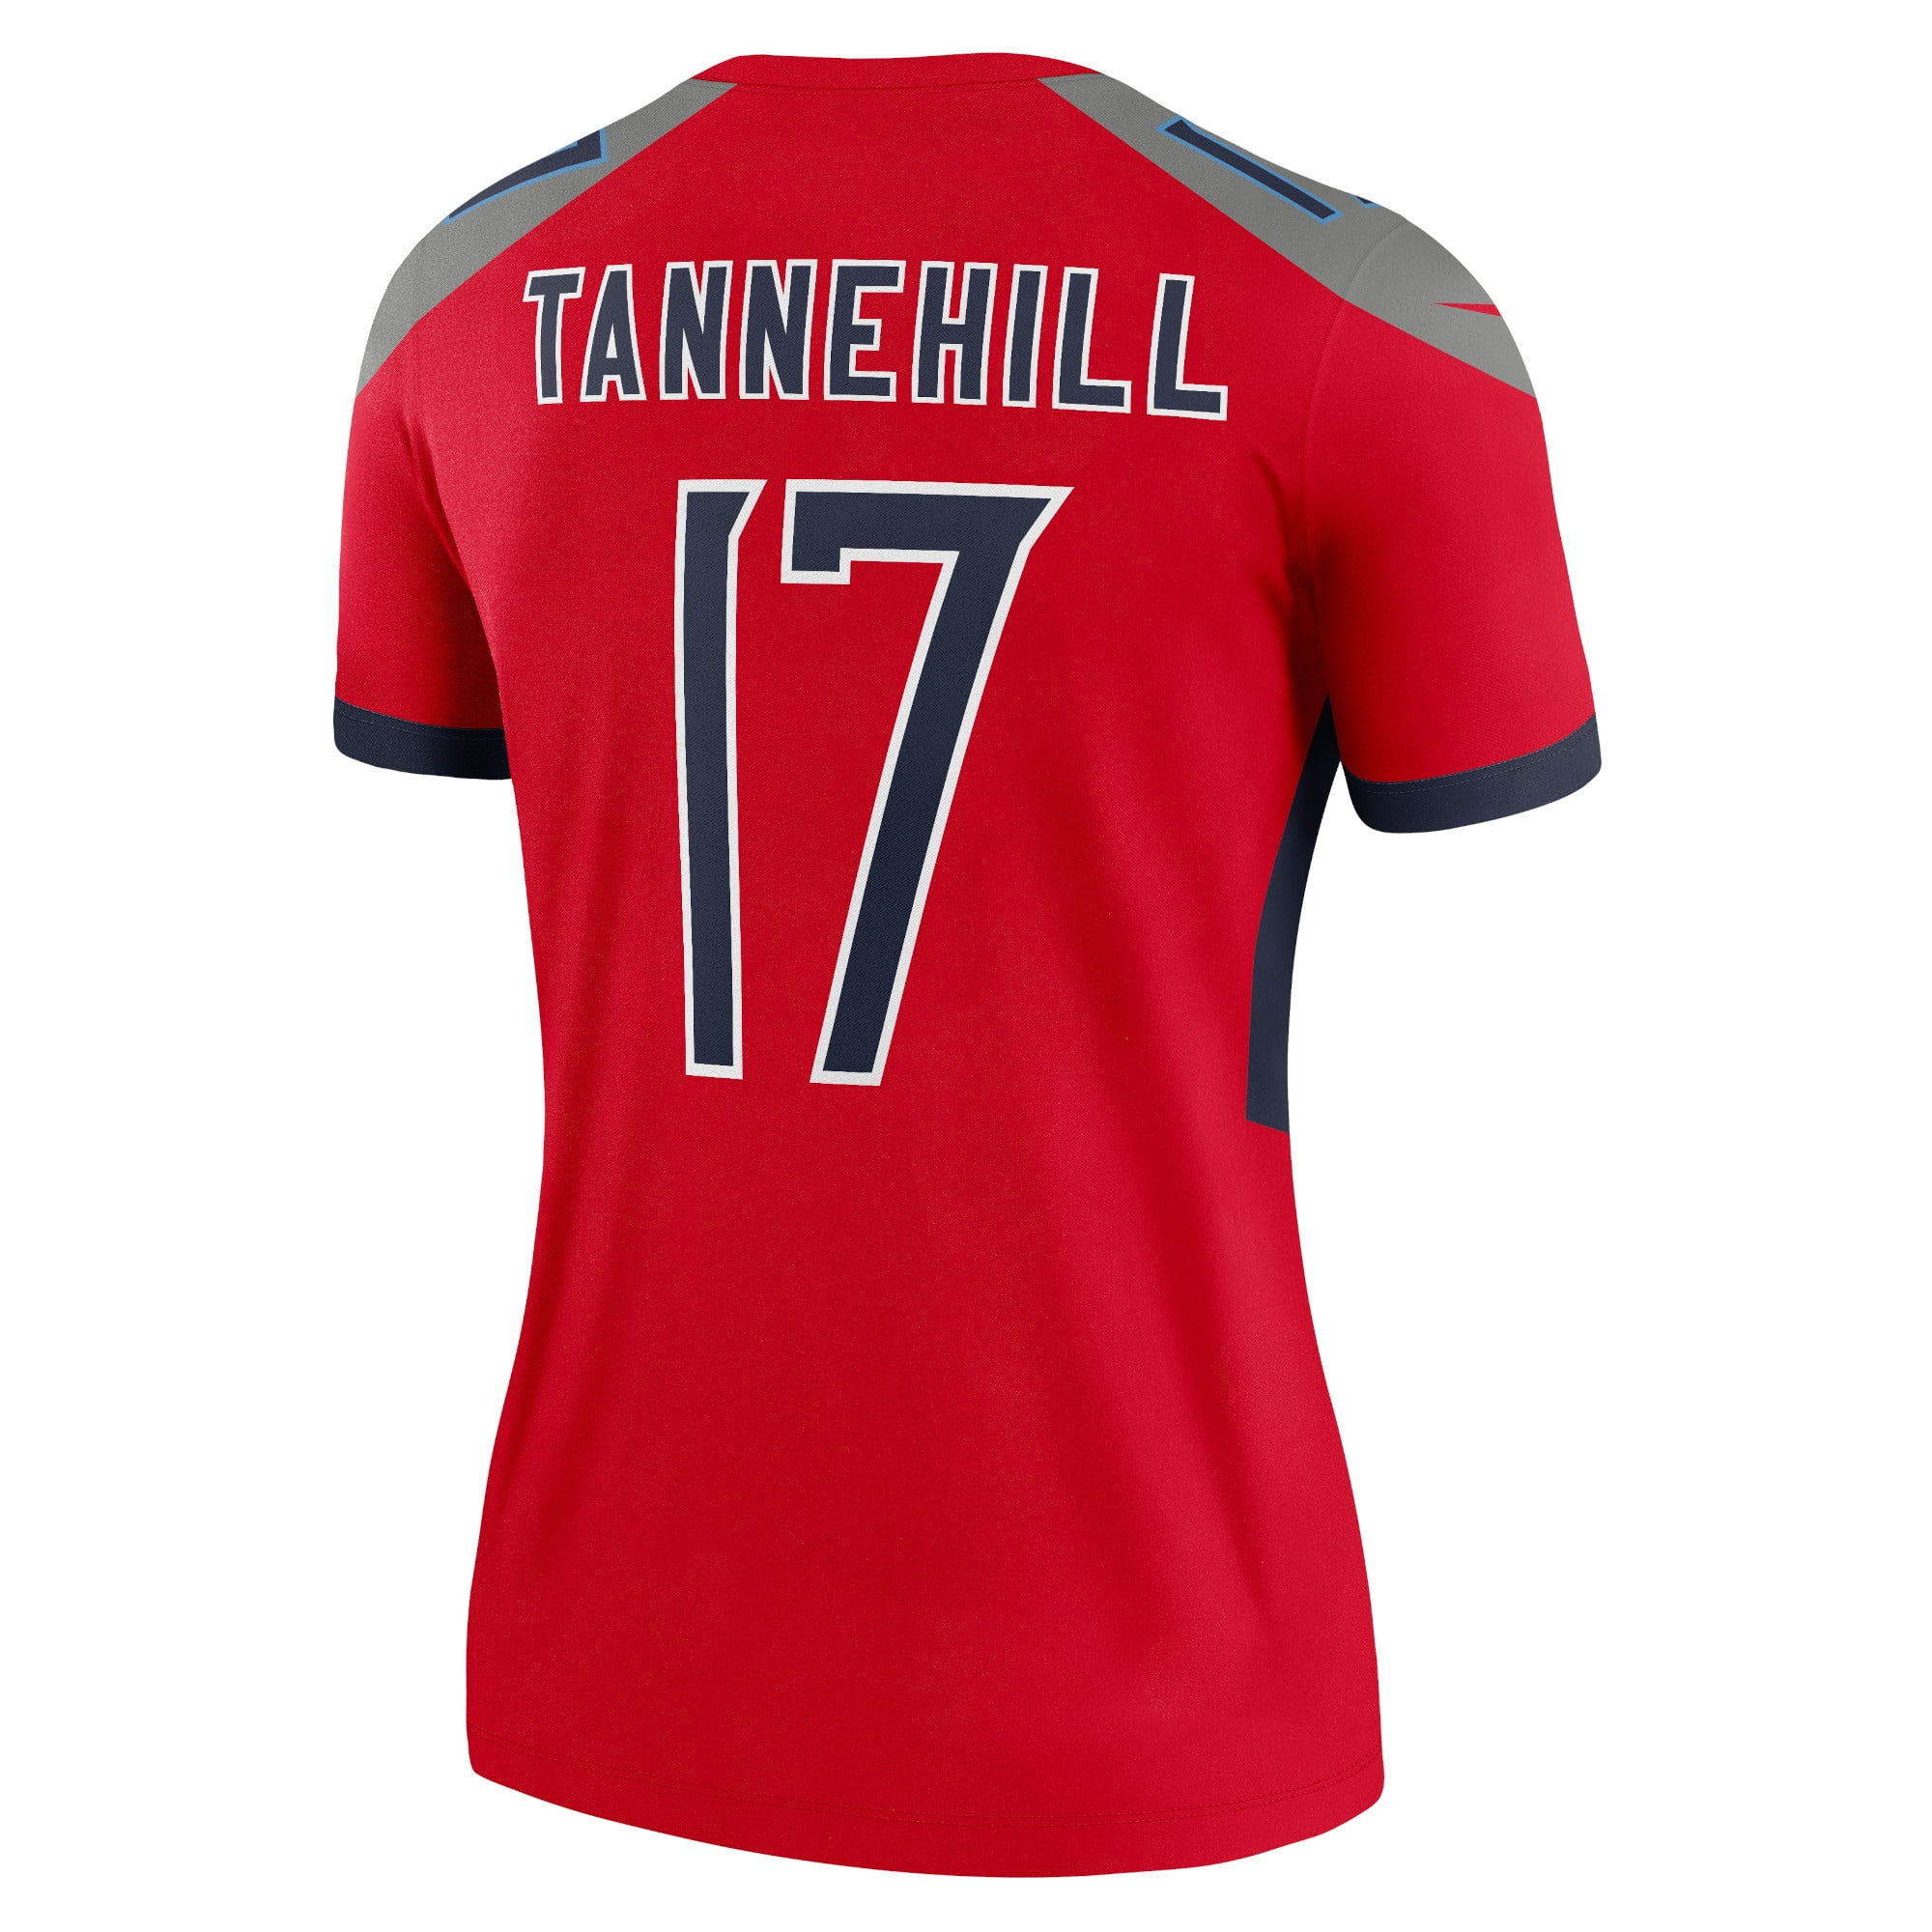 Tannehill Ryan replica jersey